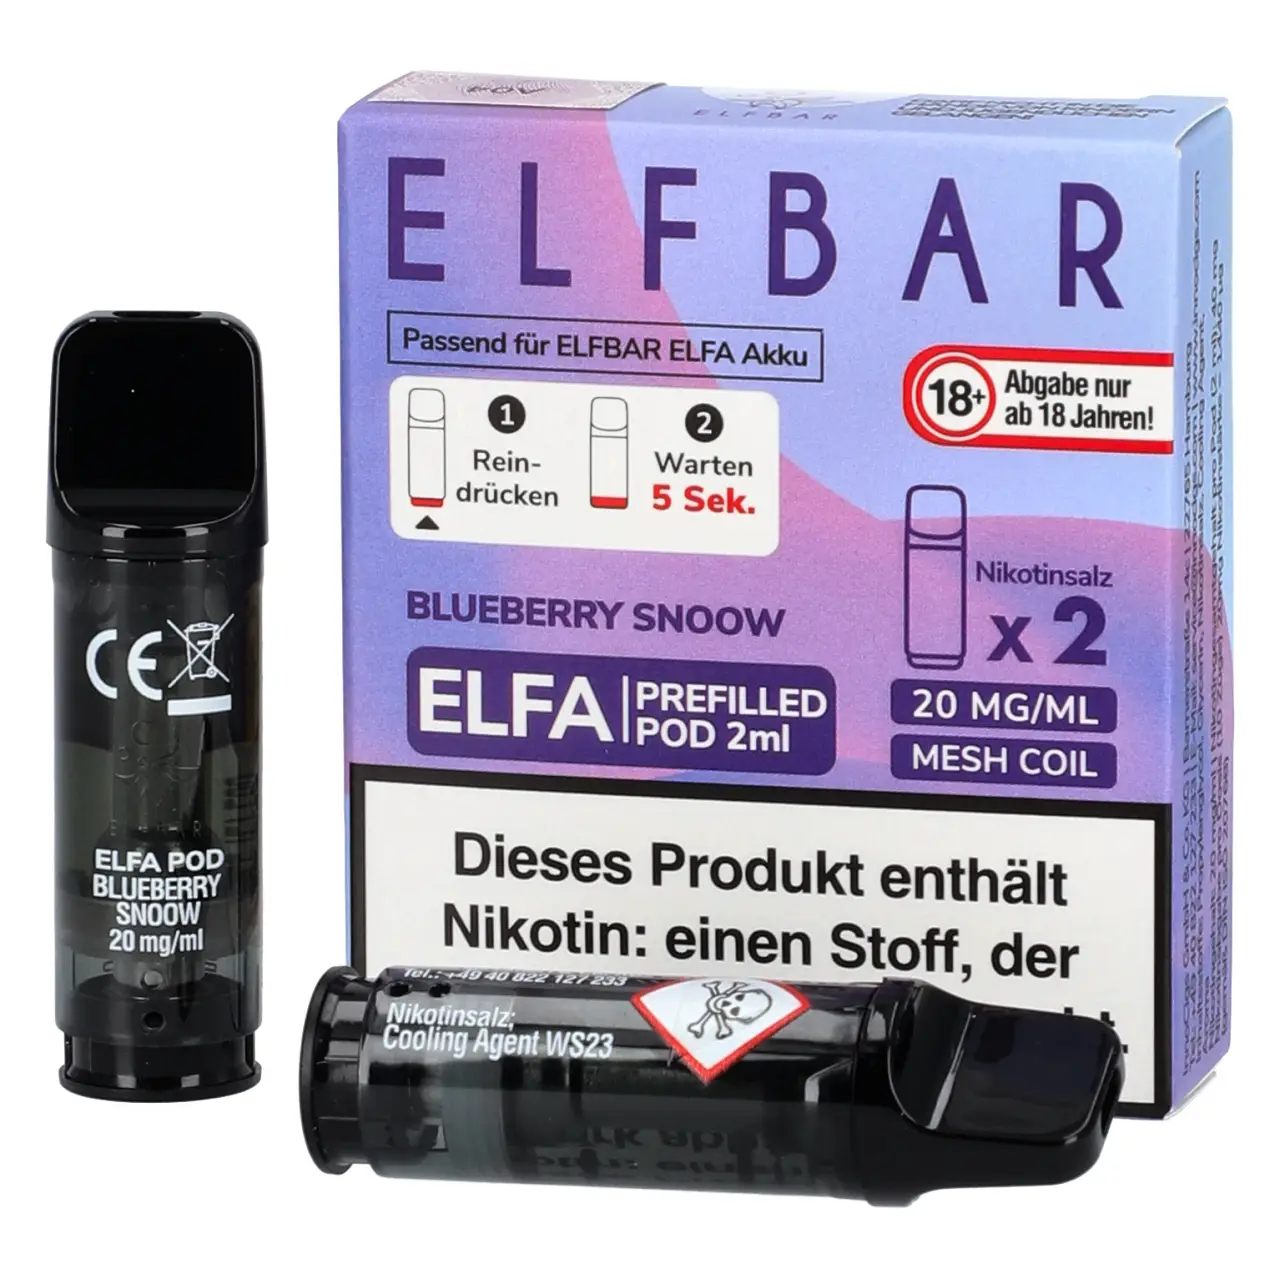 Blueberry Snoow - Elf Bar ELFA Prefilled POD für Mehrweg Vape - befüllt mit 2ml Liquid - 2er Packung